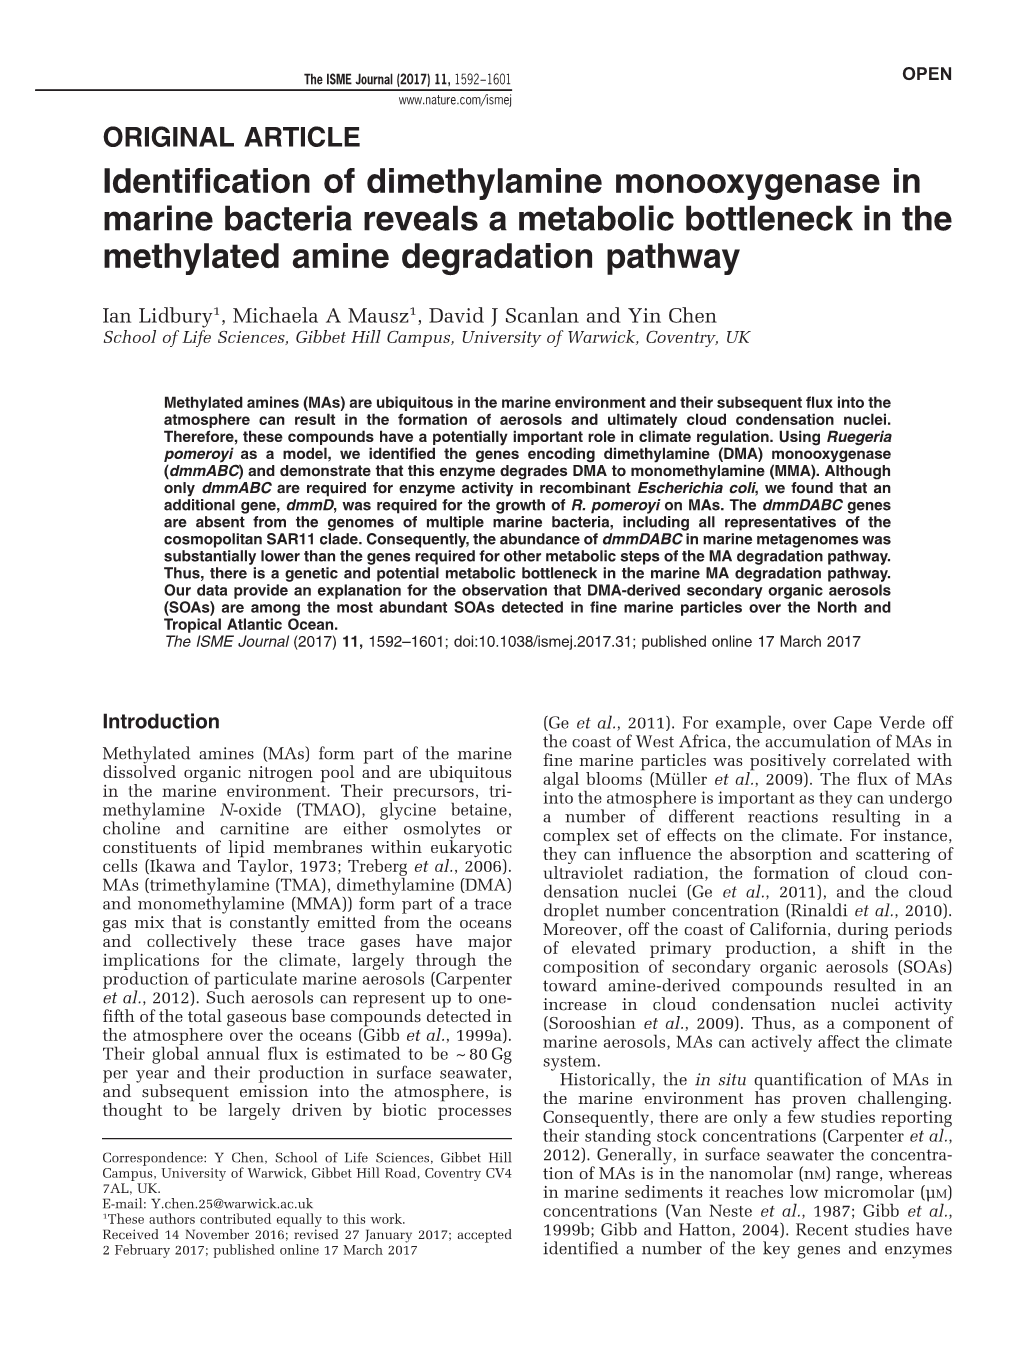 Identification of Dimethylamine Monooxygenase in Marine Bacteria Reveals a Metabolic Bottleneck in the Methylated Amine Degradation Pathway